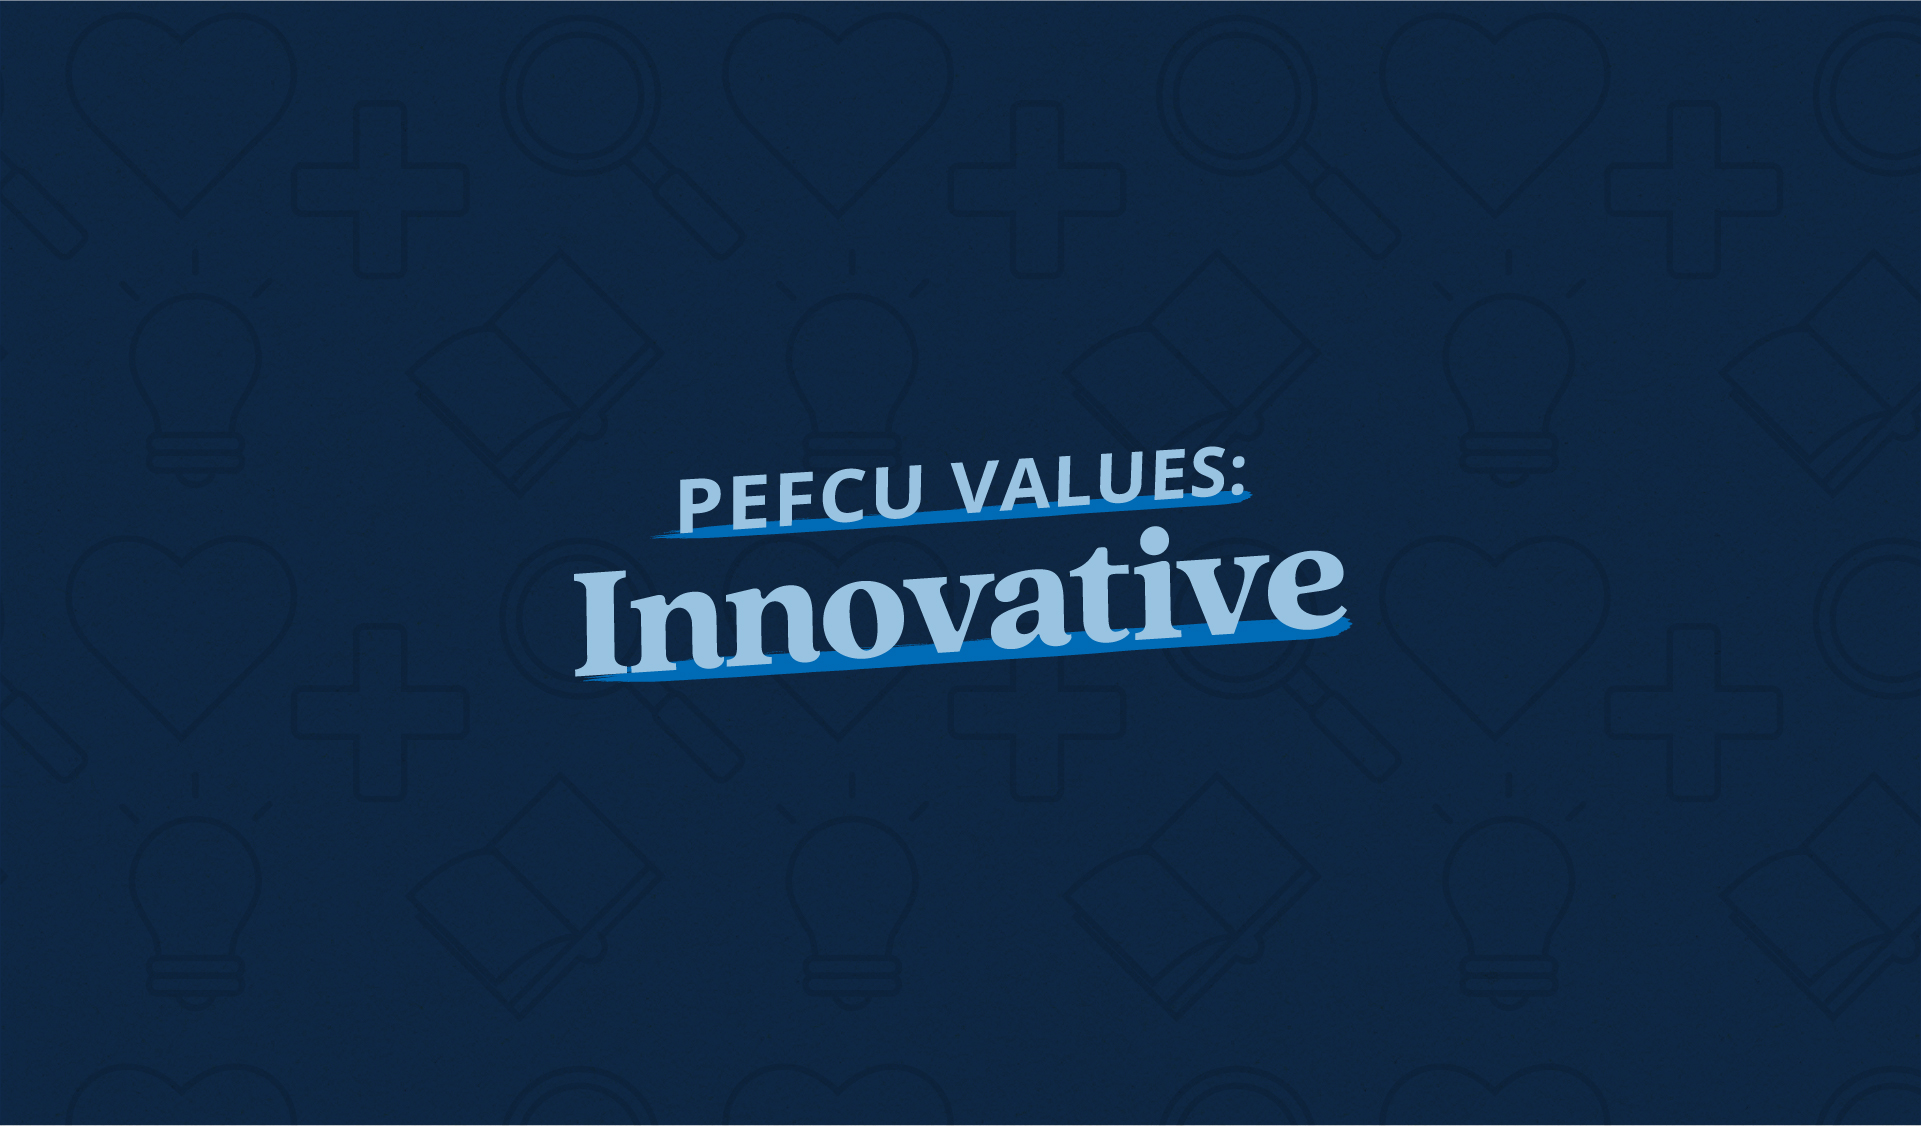 PEFCU Values: Innovative